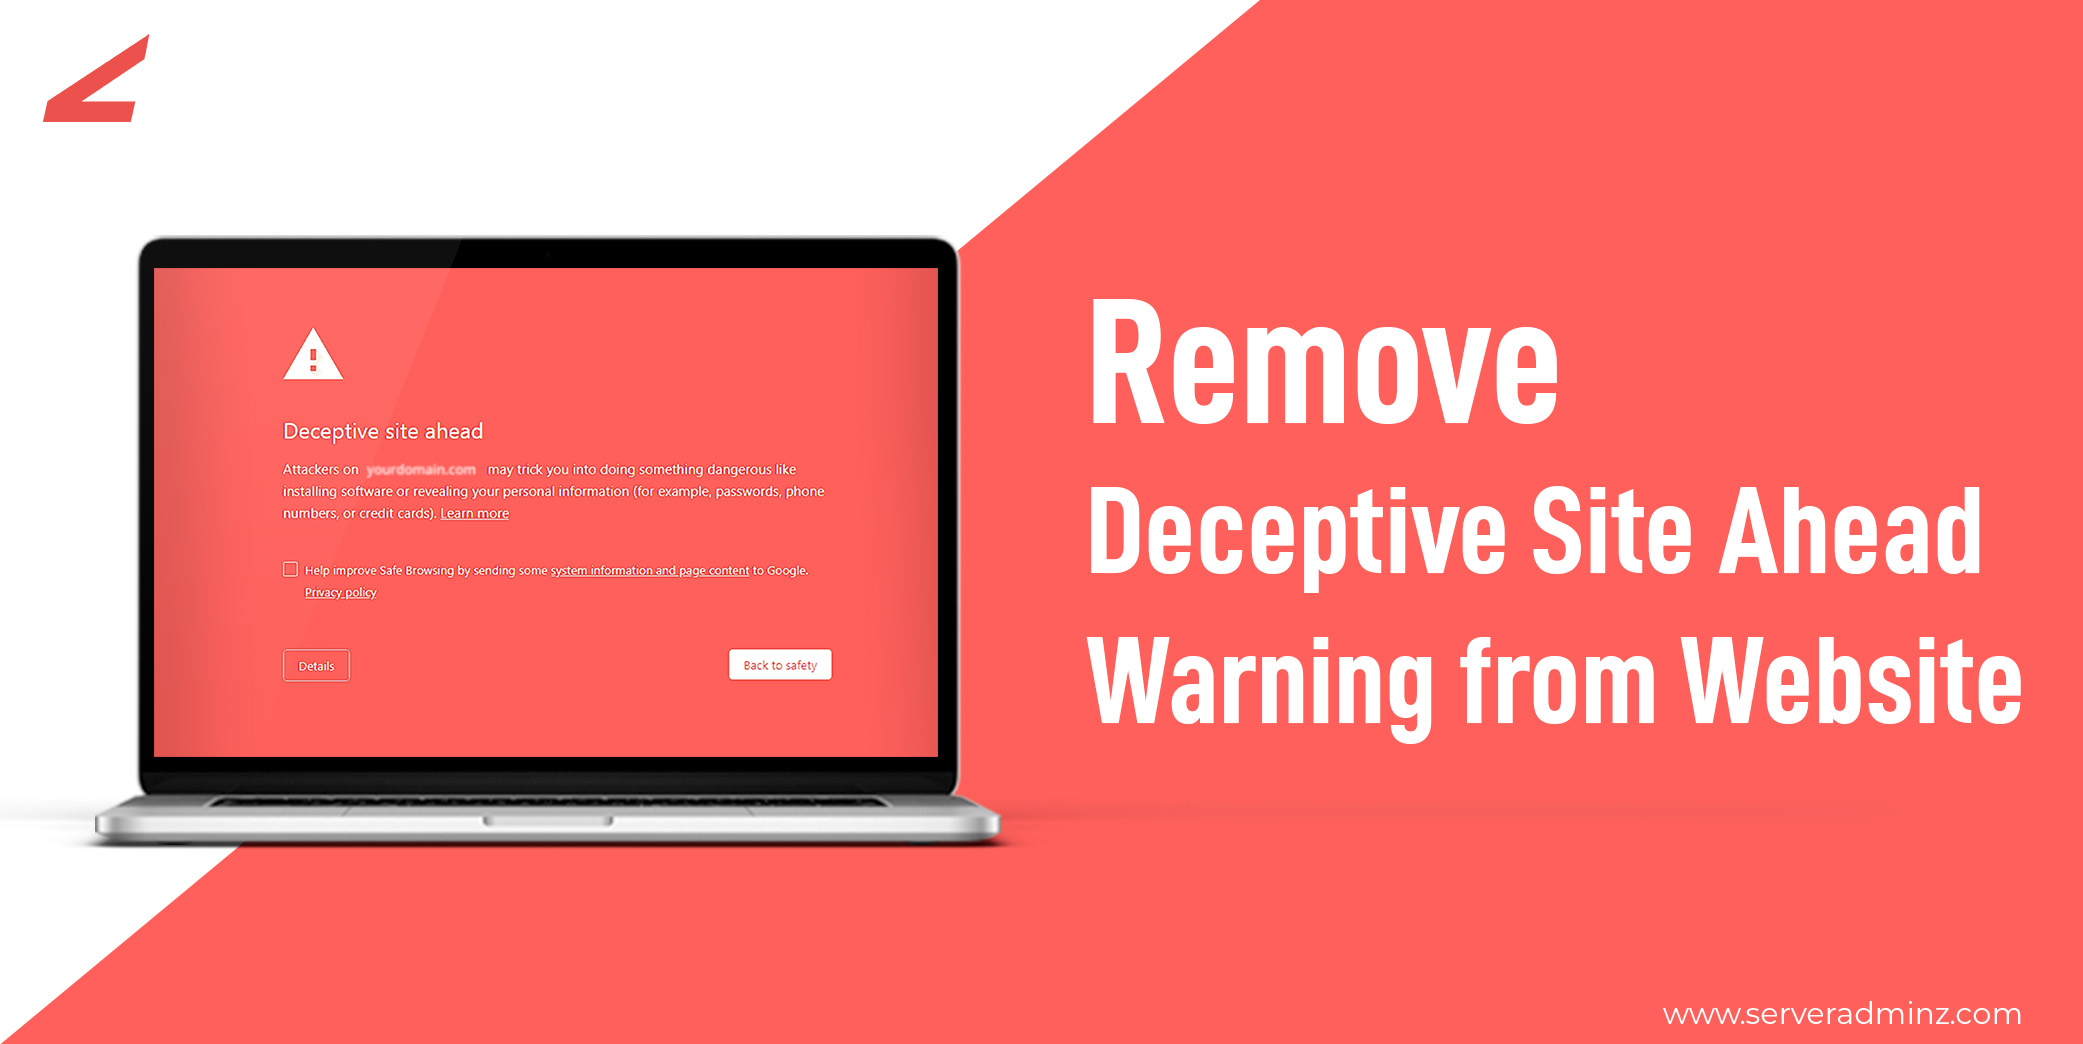 Remove Deceptive Site Ahead Warning